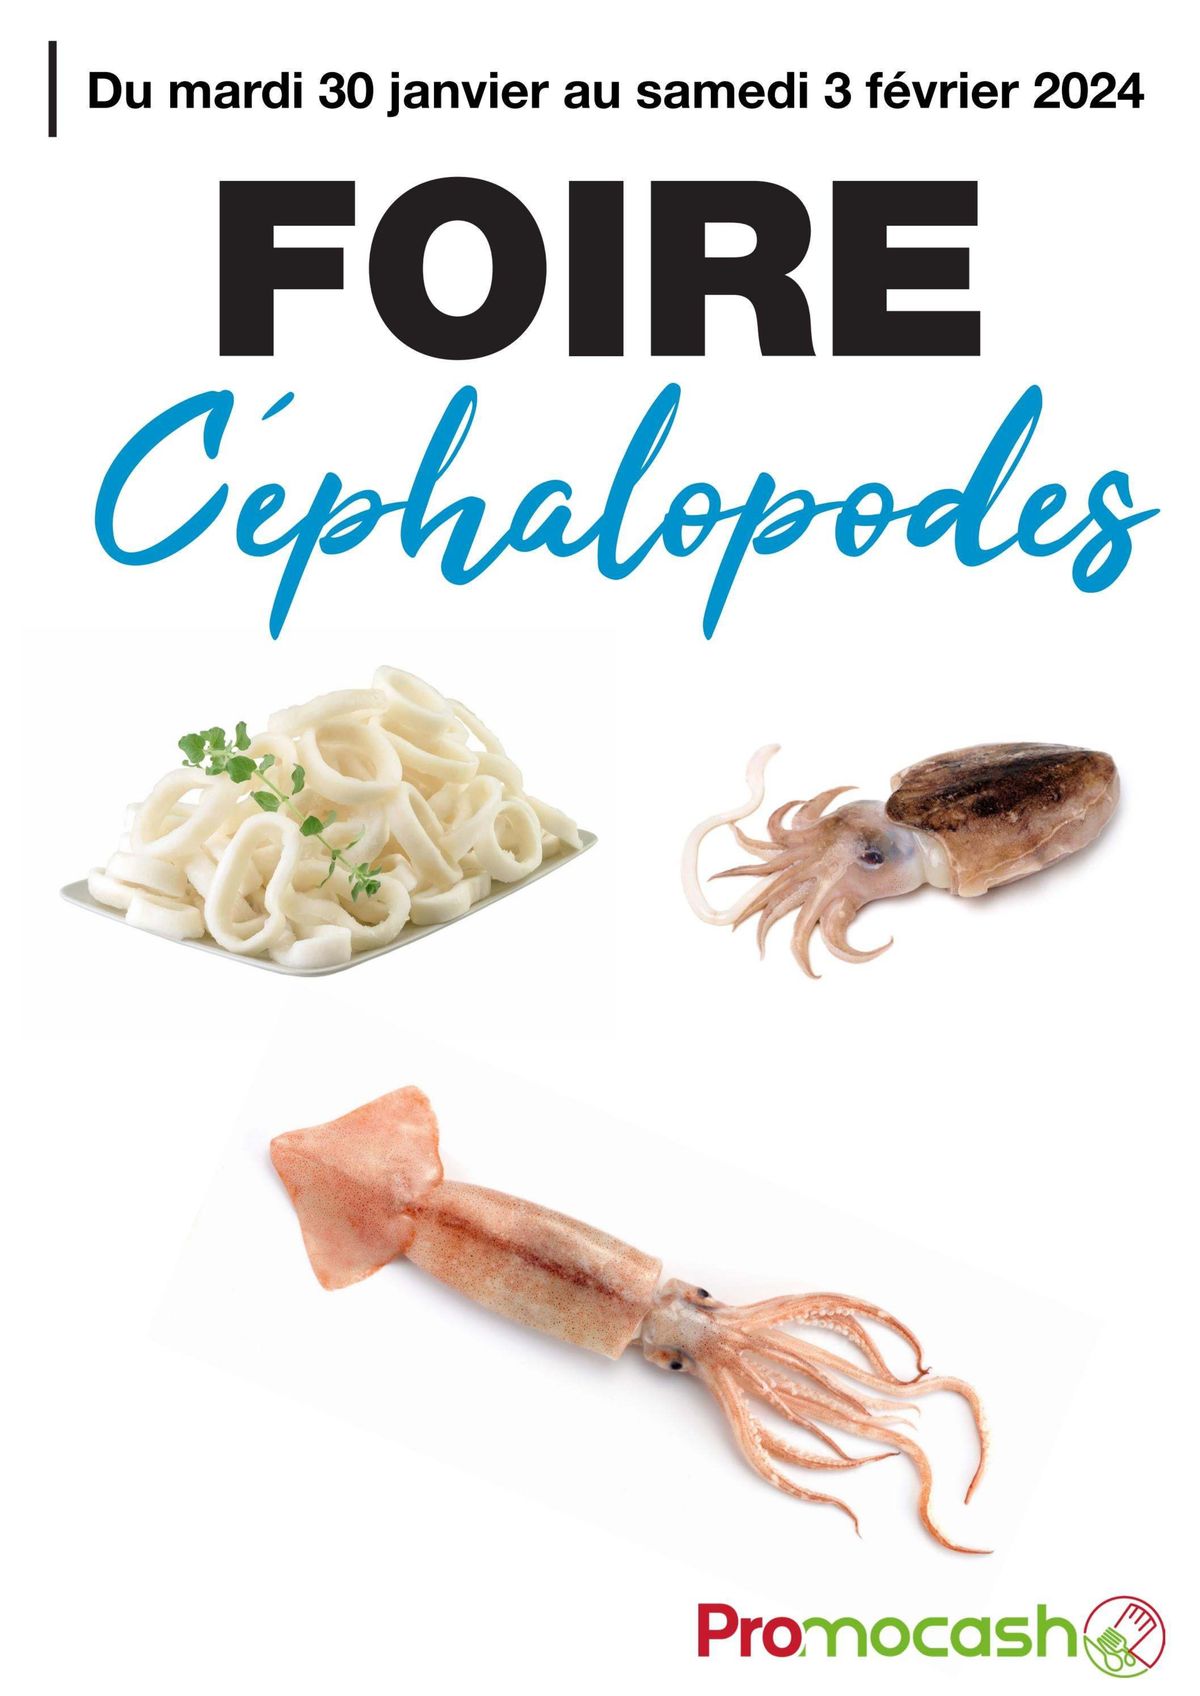 Catalogue Foire Cephalopodes, page 00001